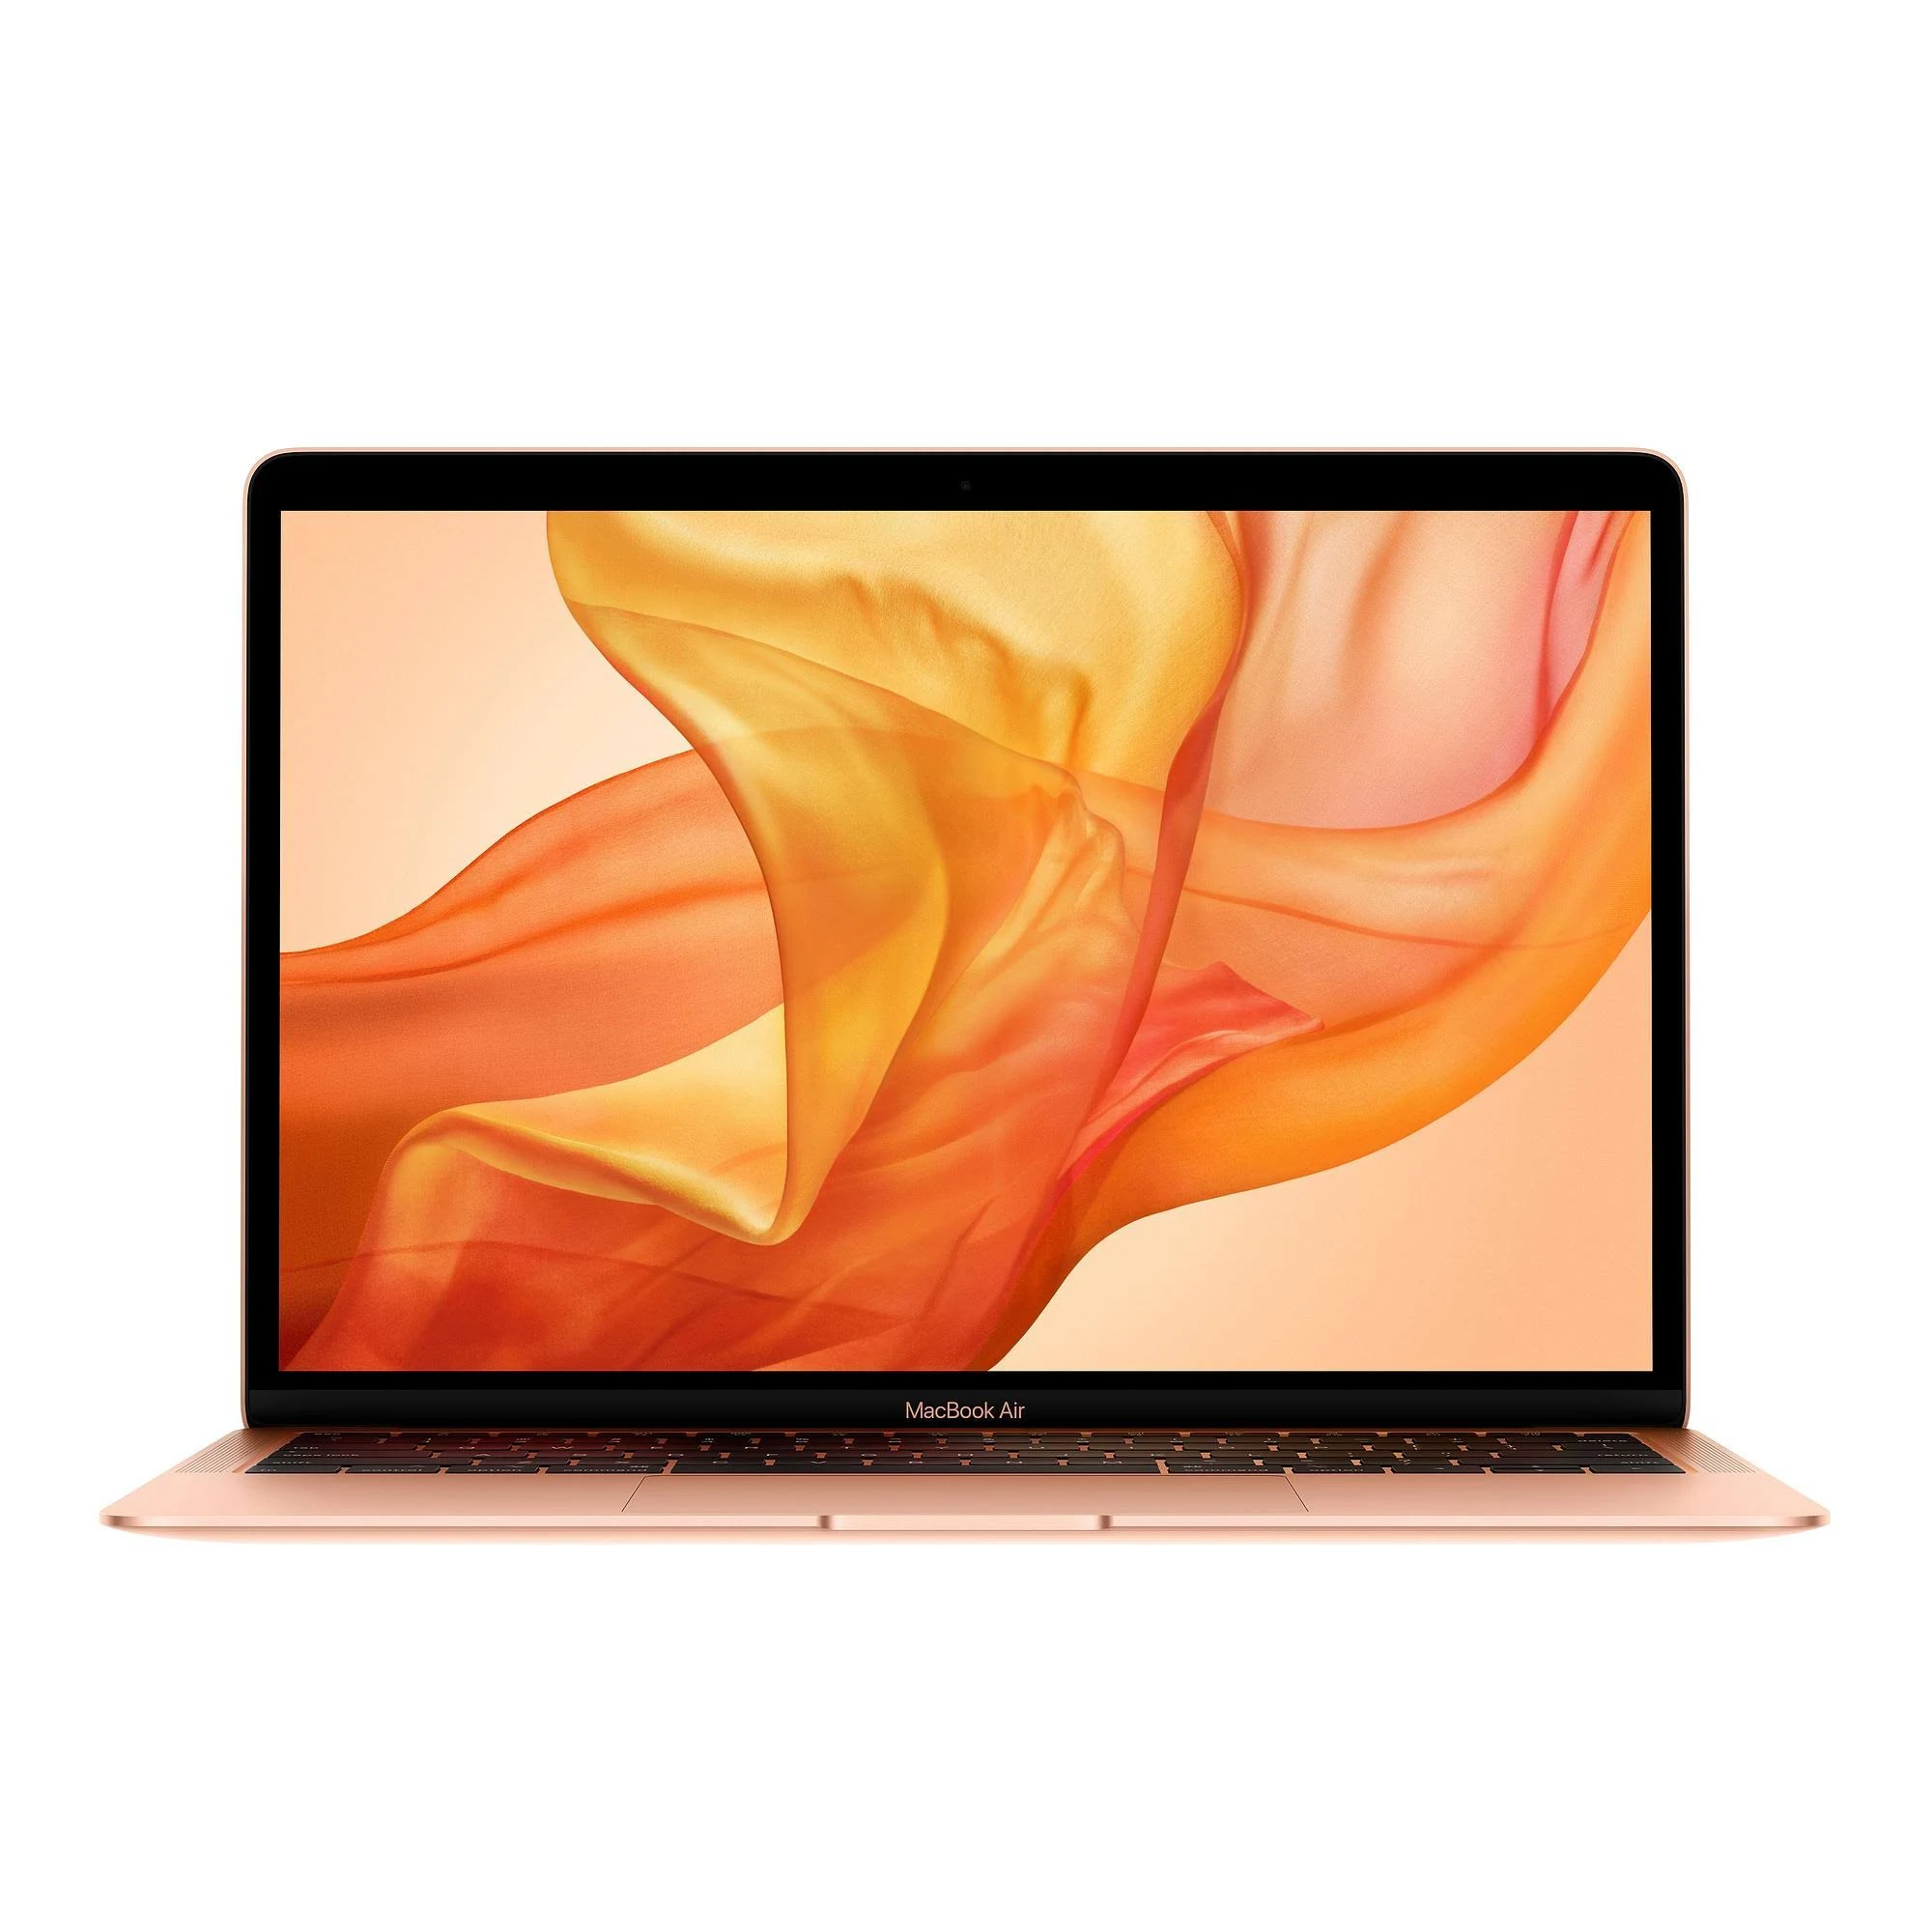 MacBook Air 13 inch True Tone 2019 i5 1.6GHz - 256GB SSD - 16GB Ram 256GB Gold Very Good